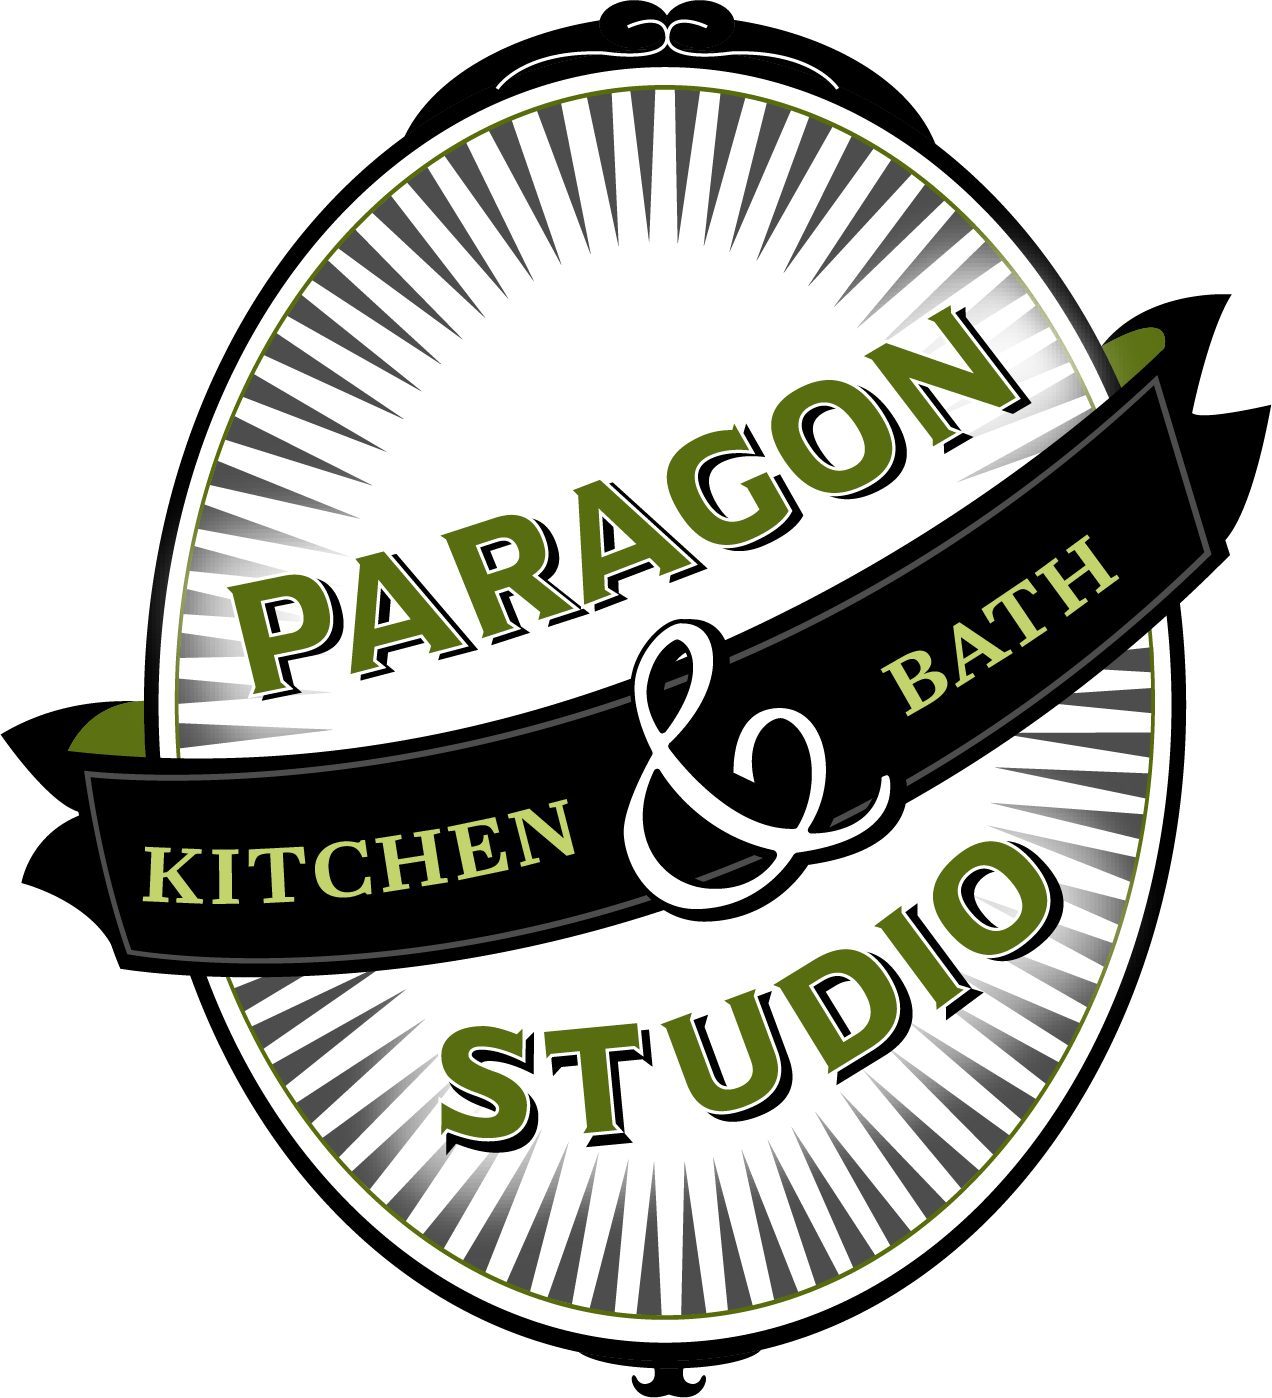 Paragon Kitchen & Bath Studio